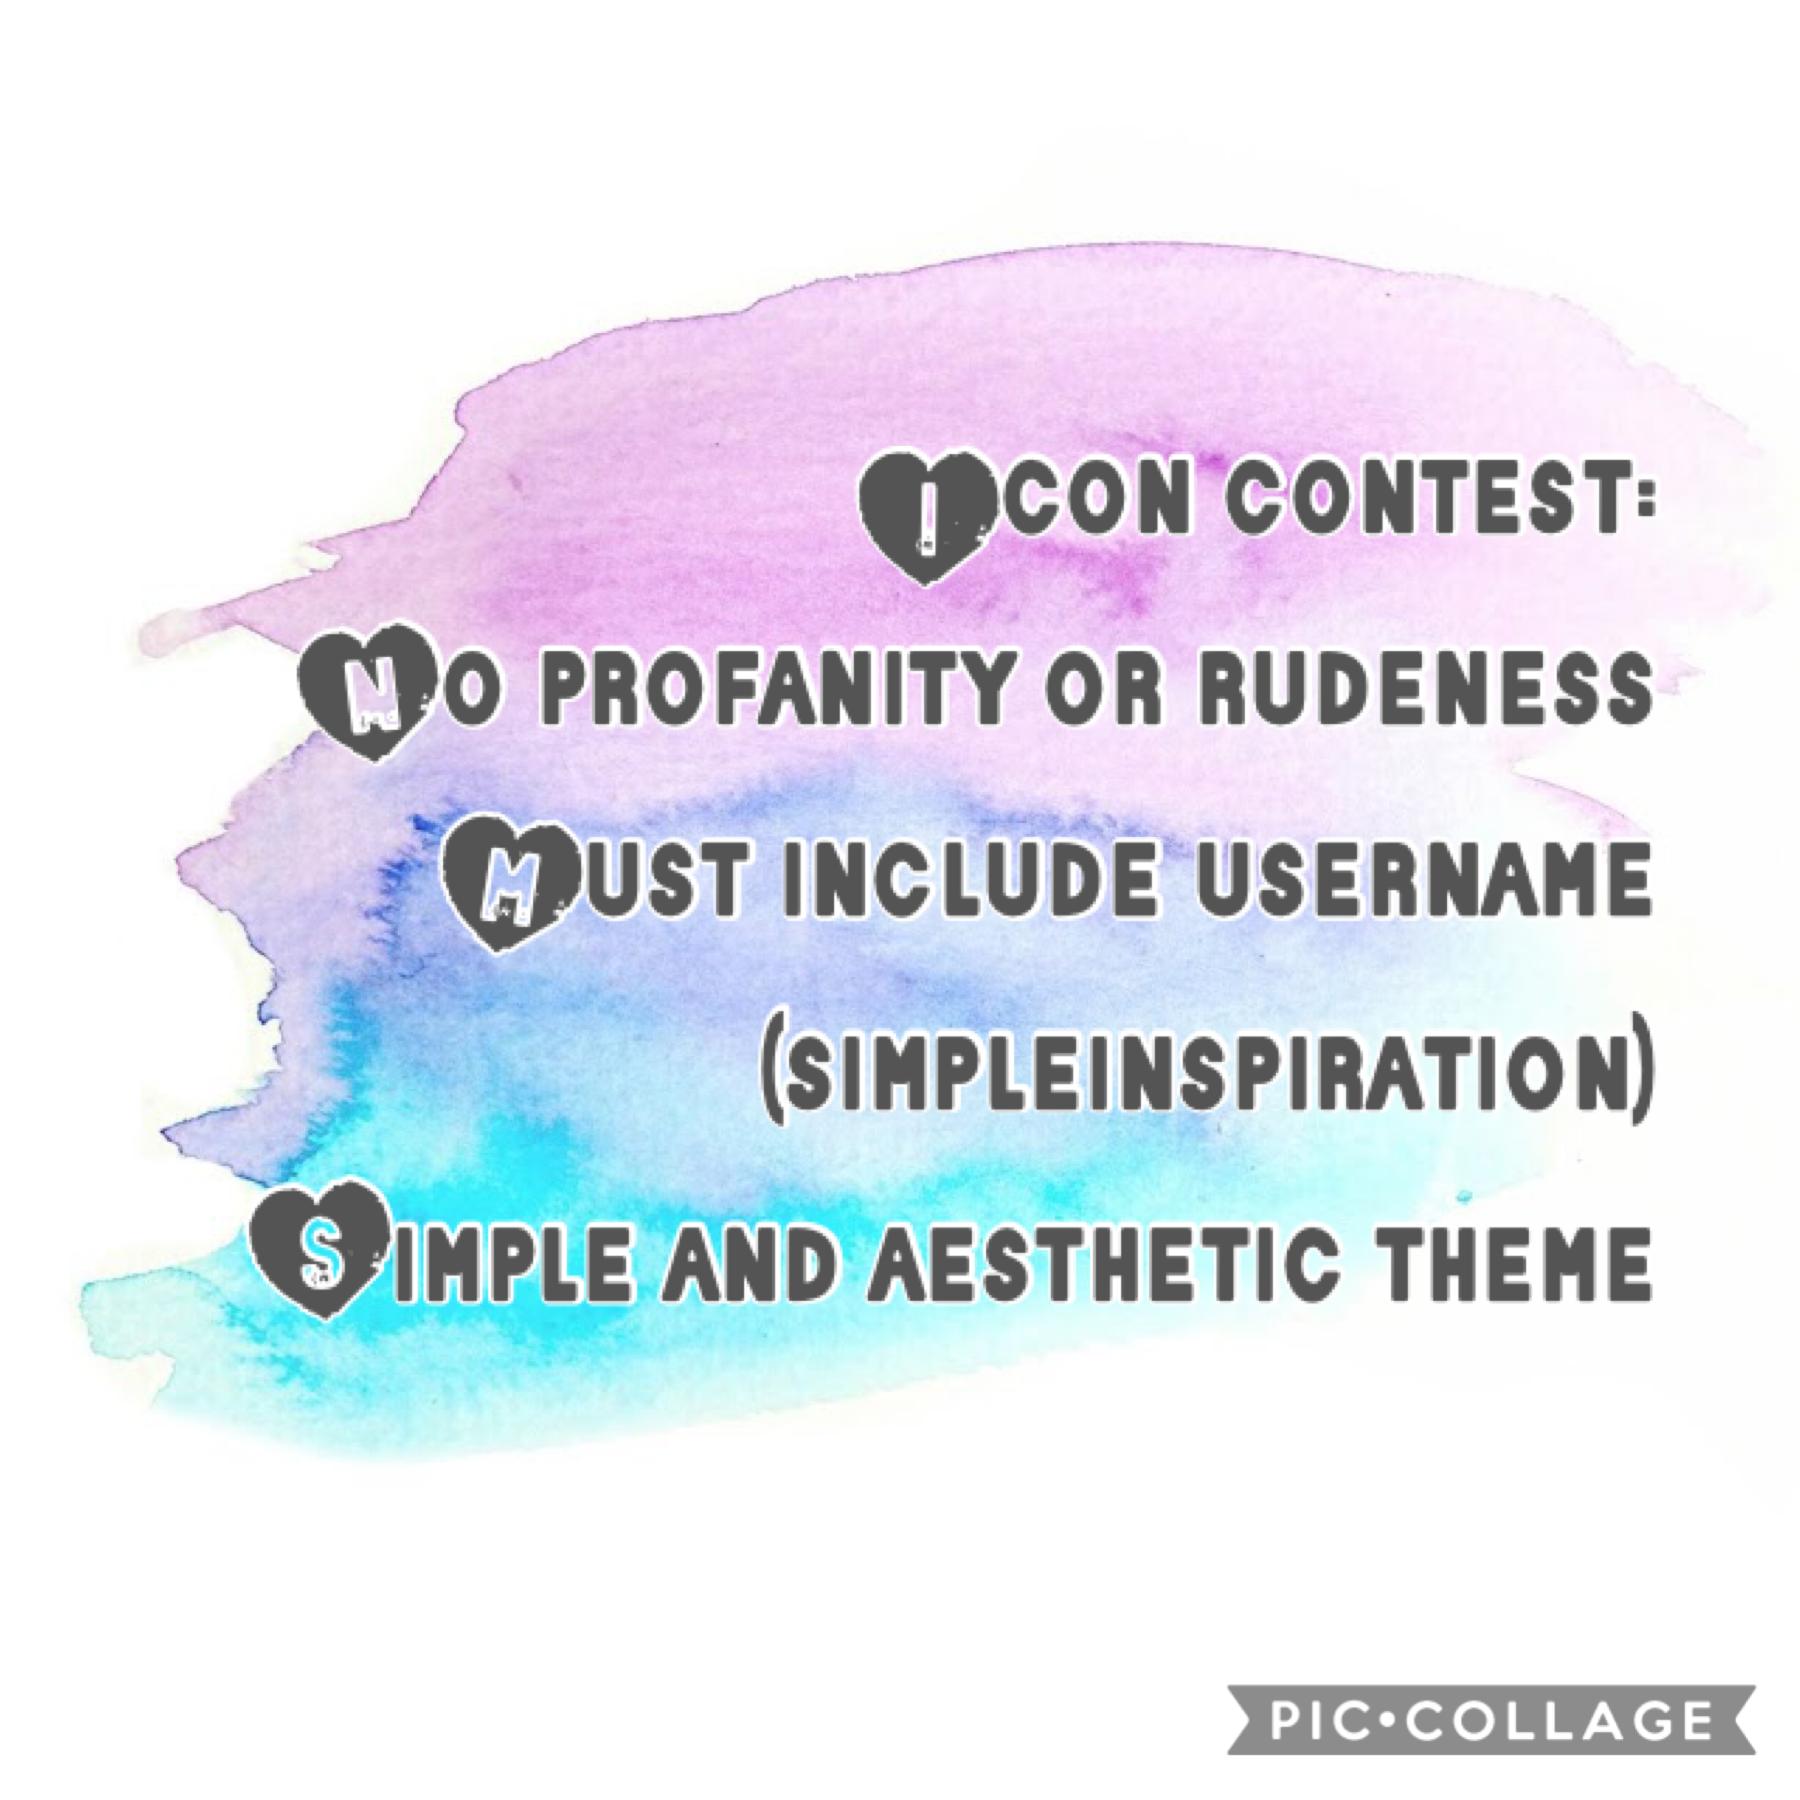 Icon contest details!